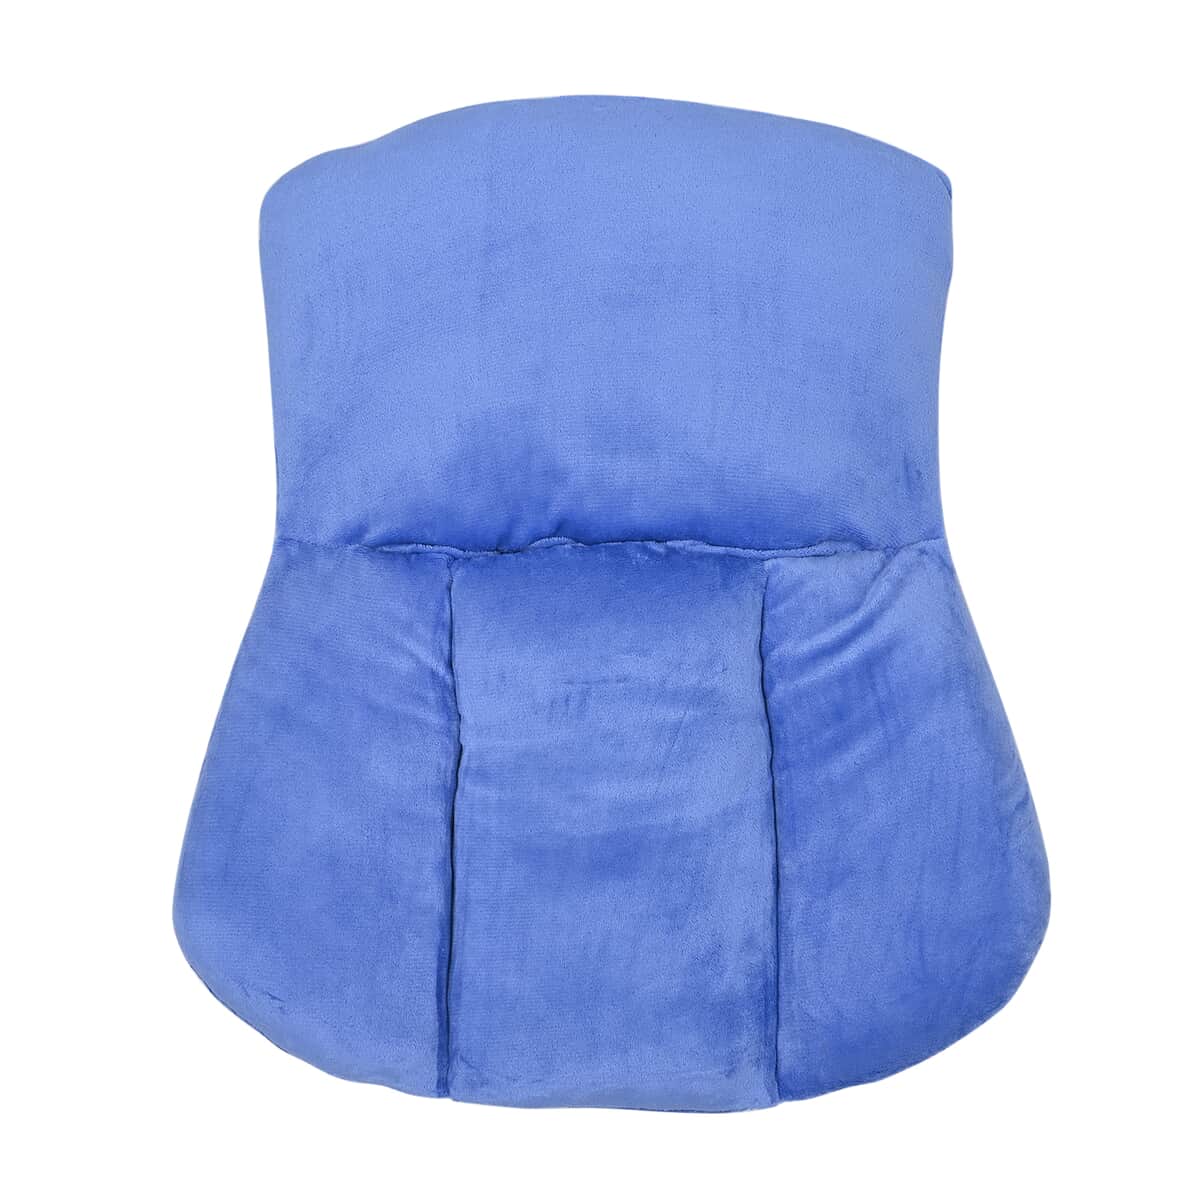 Velvet Soft Back Support Cushion - Light Blue (Microfiber) image number 0